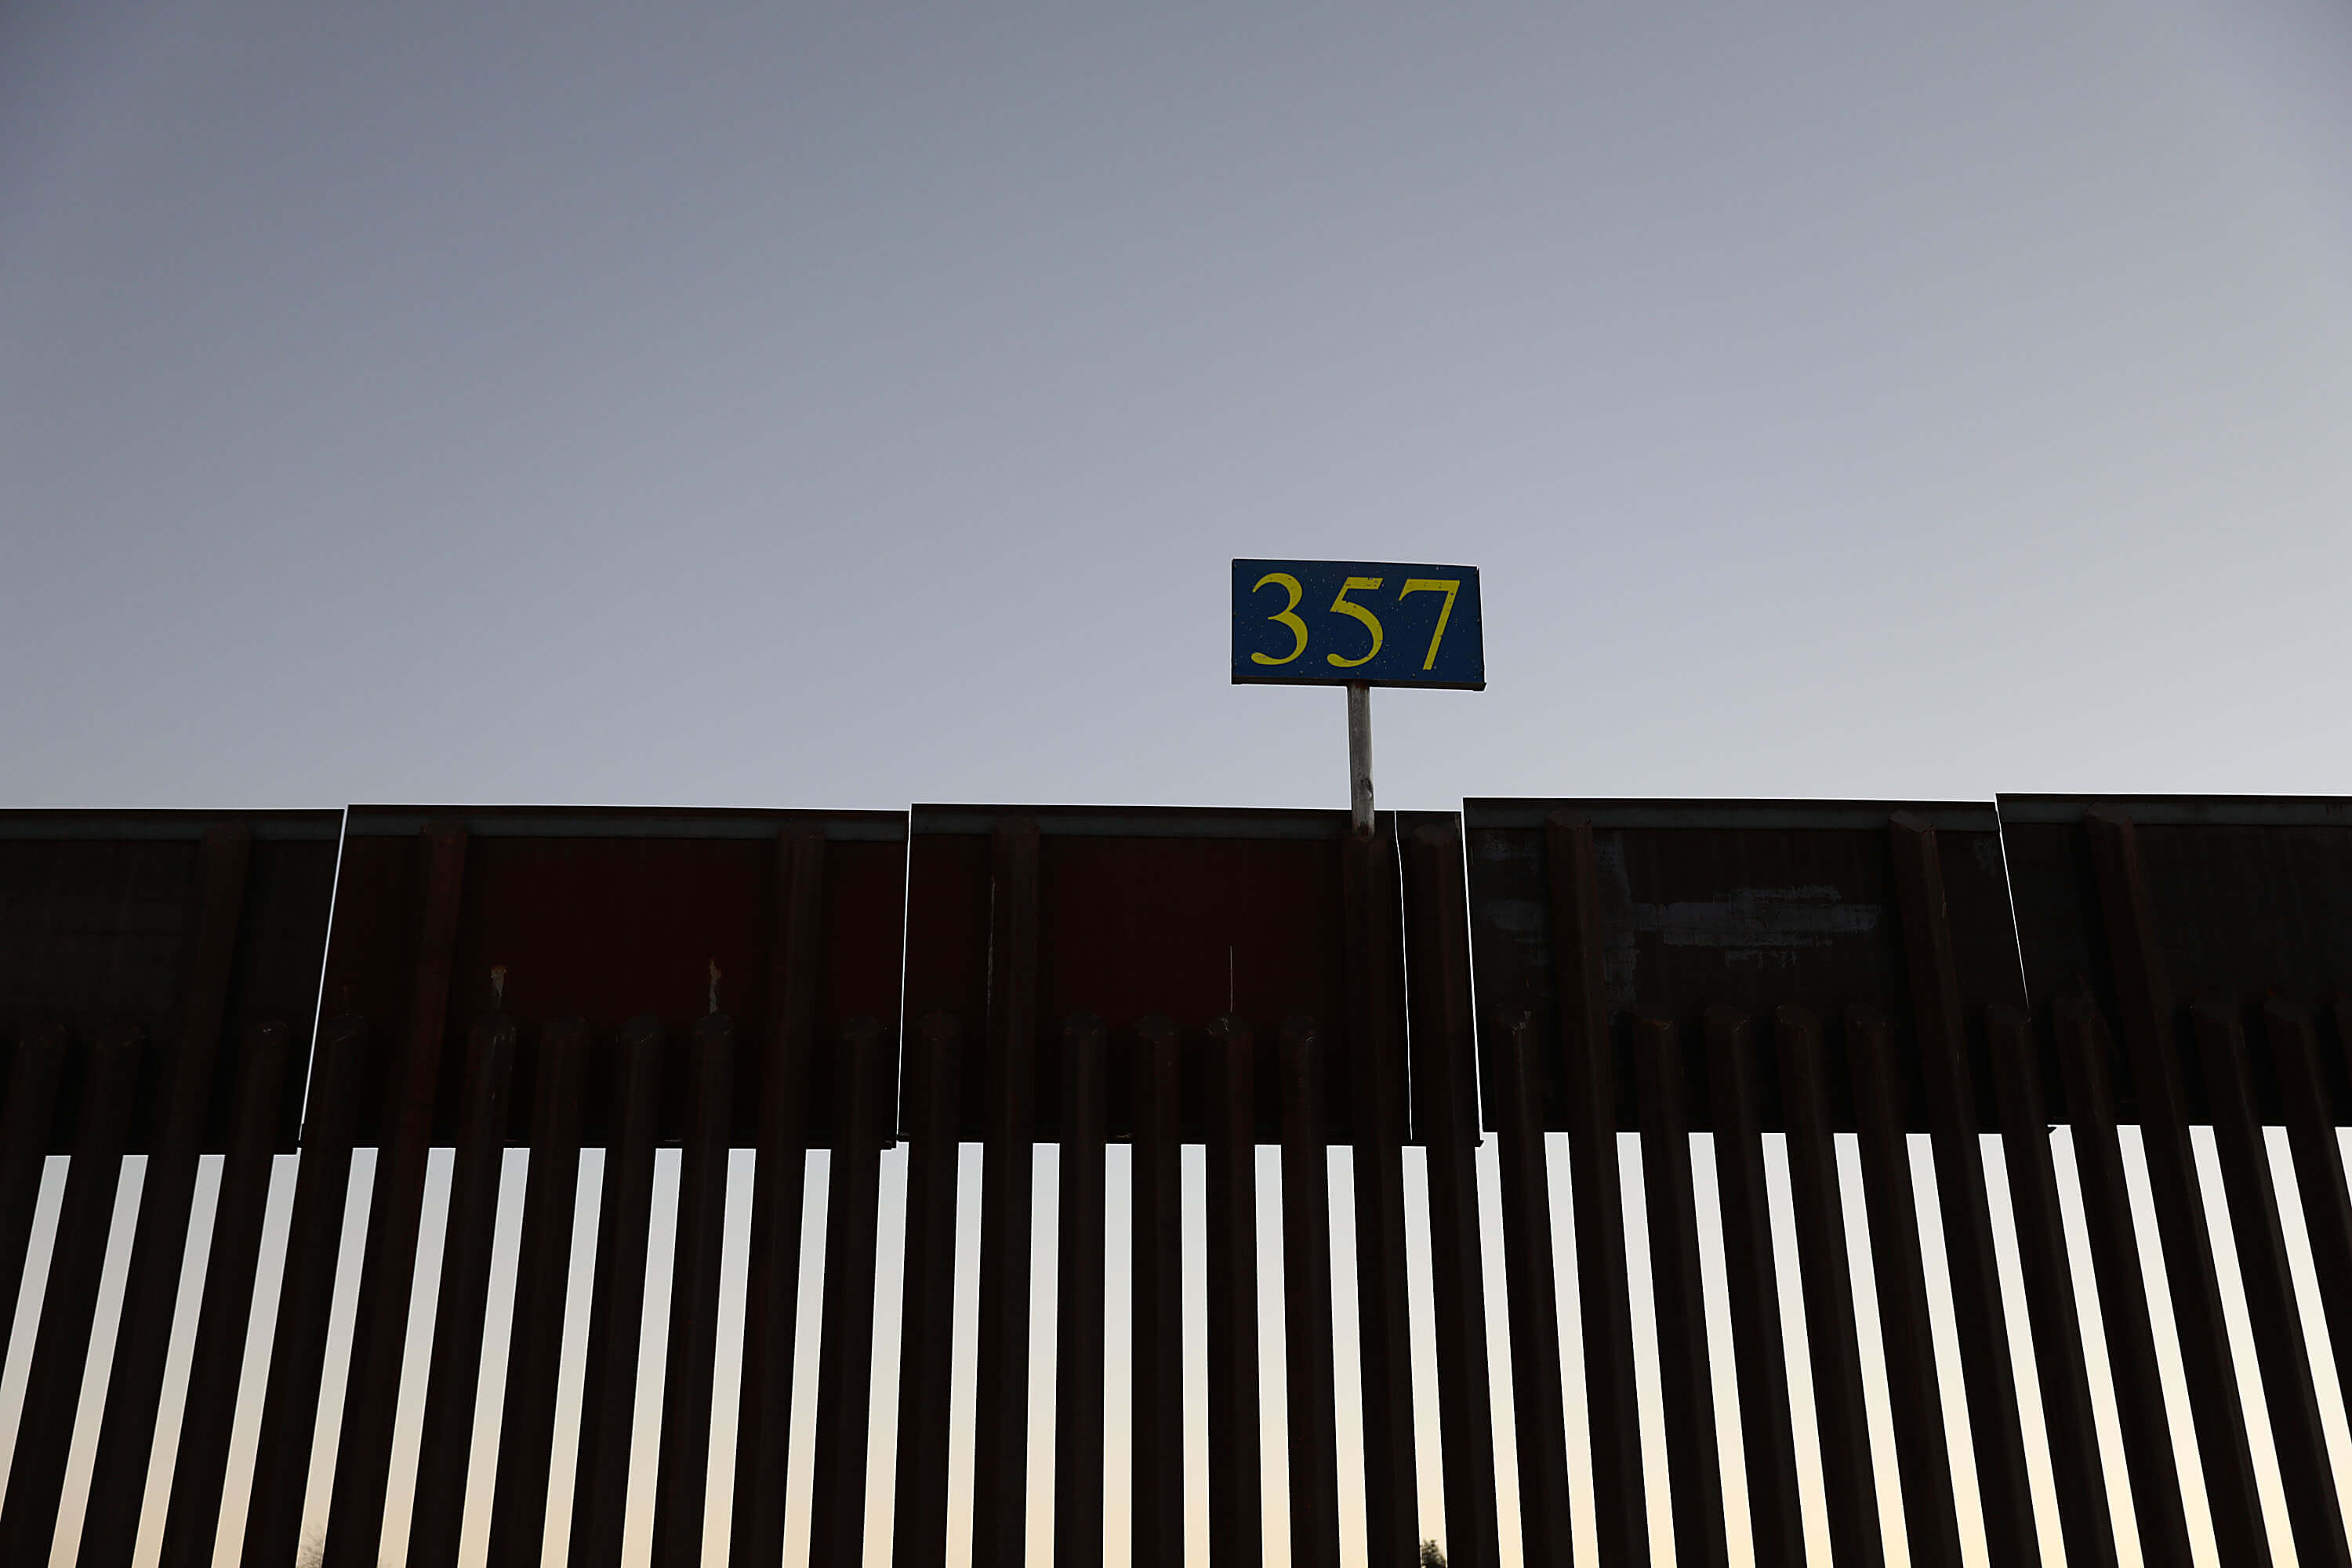 The U.S./Mexico border fence